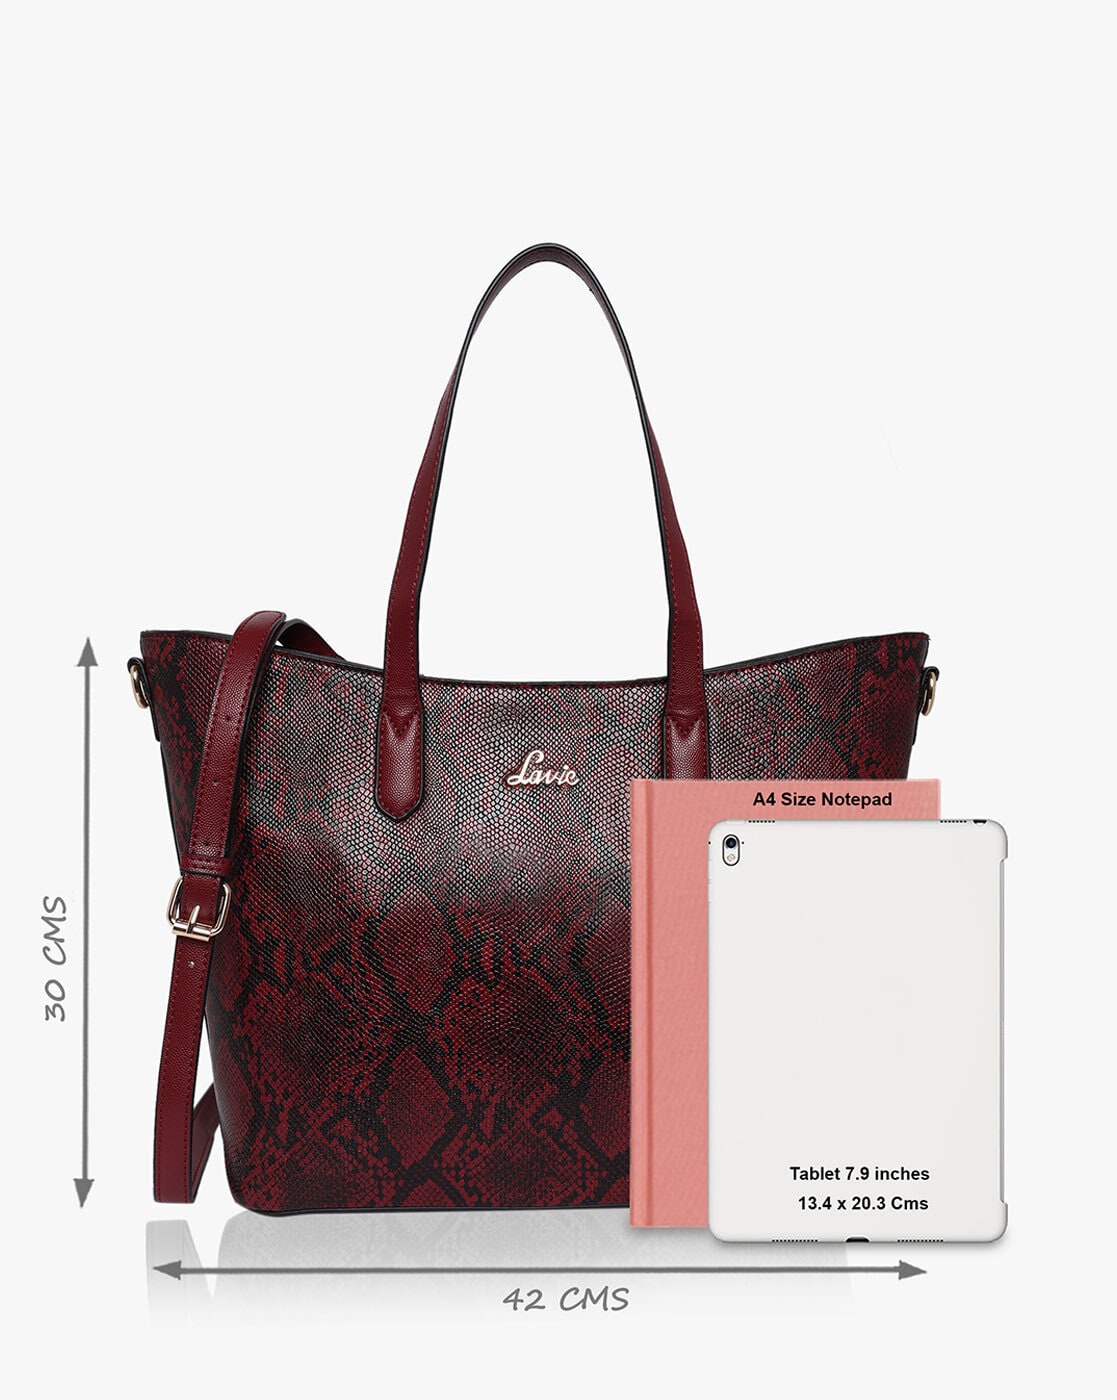 Lavie Women's Kris Large Satchel Bag Coral Ladies Purse Handbag : Amazon.in:  Electronics